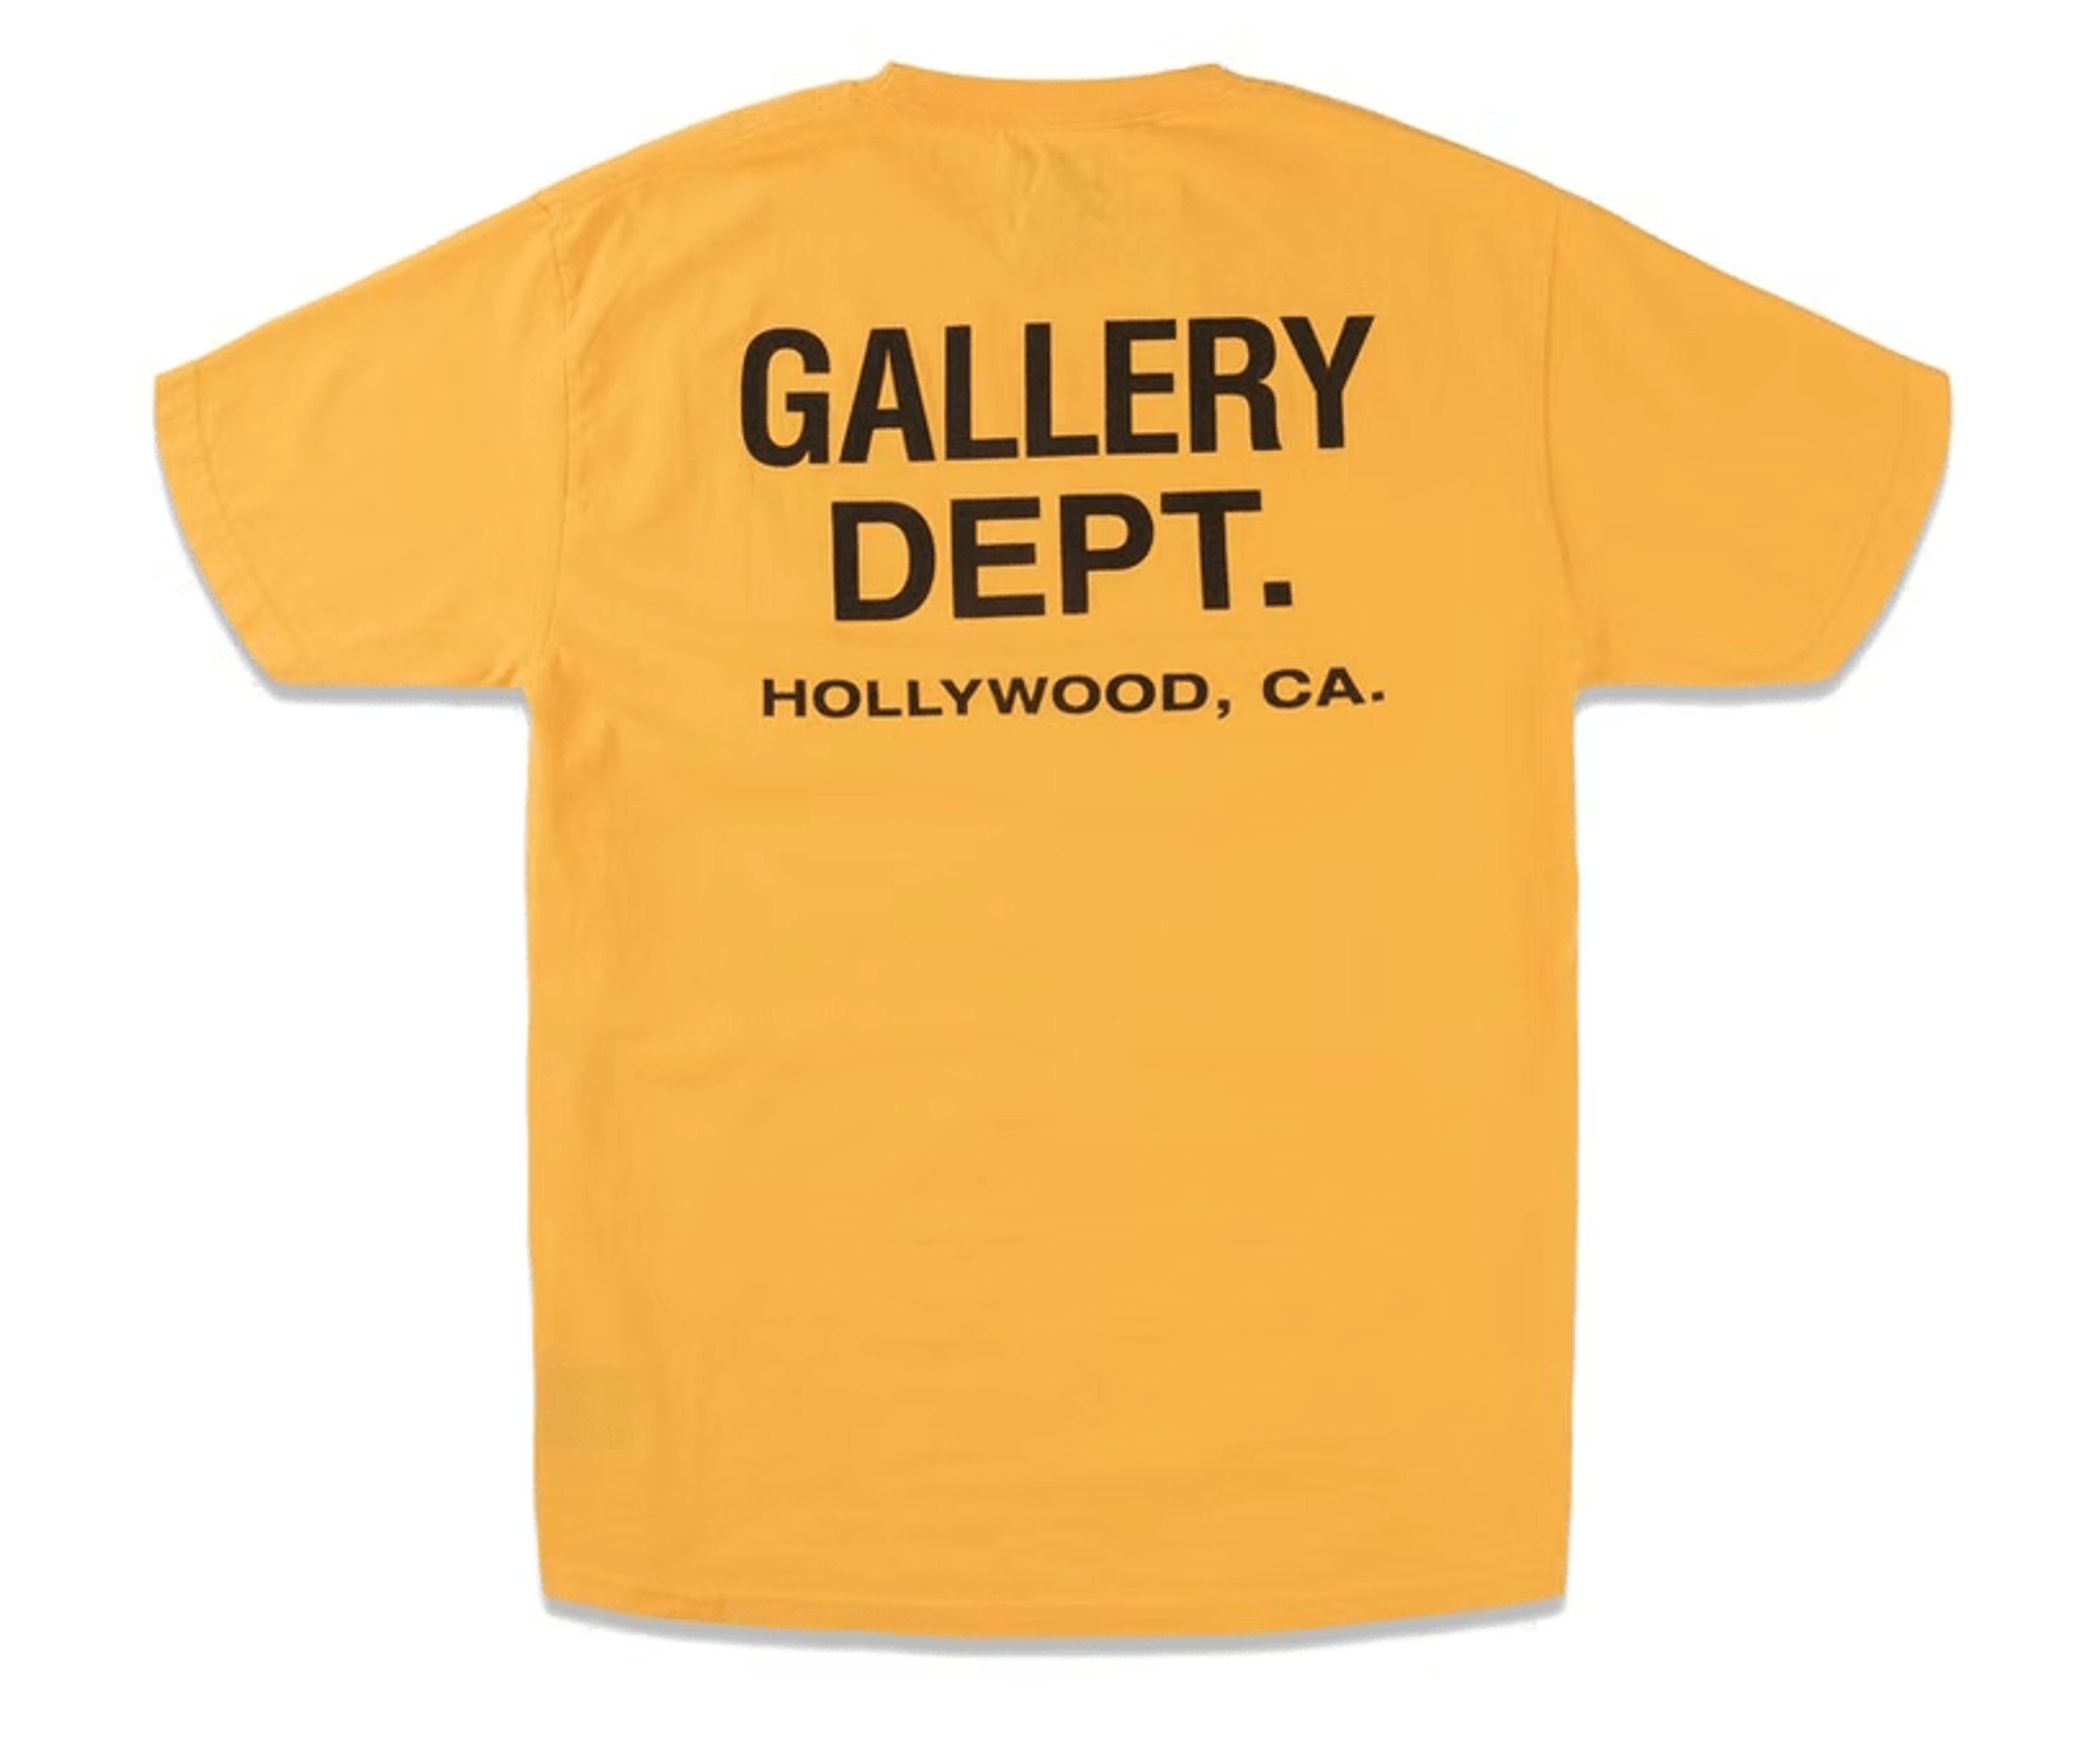 Alternate View 2 of Gallery Department Souvenir Short Sleeve Tee Shirt Yellow